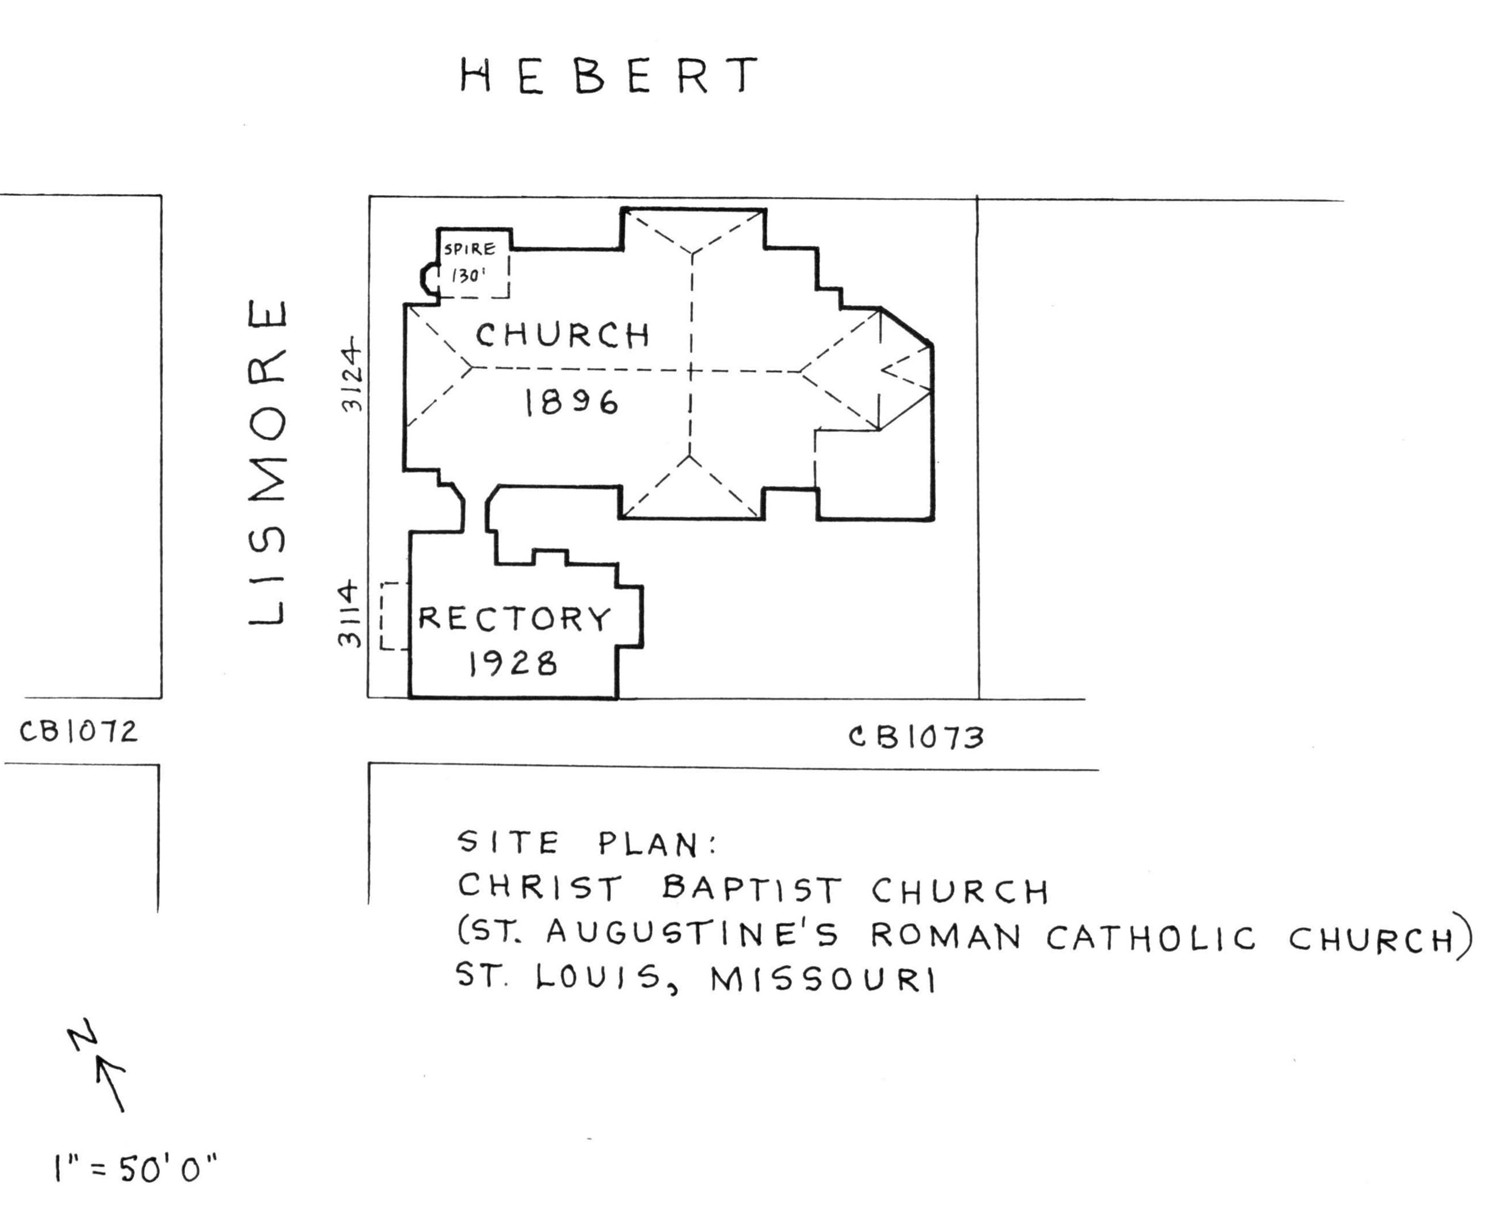 St. Augustine's Roman Catholic Church, St. Louis Missouri Site plan (1986)